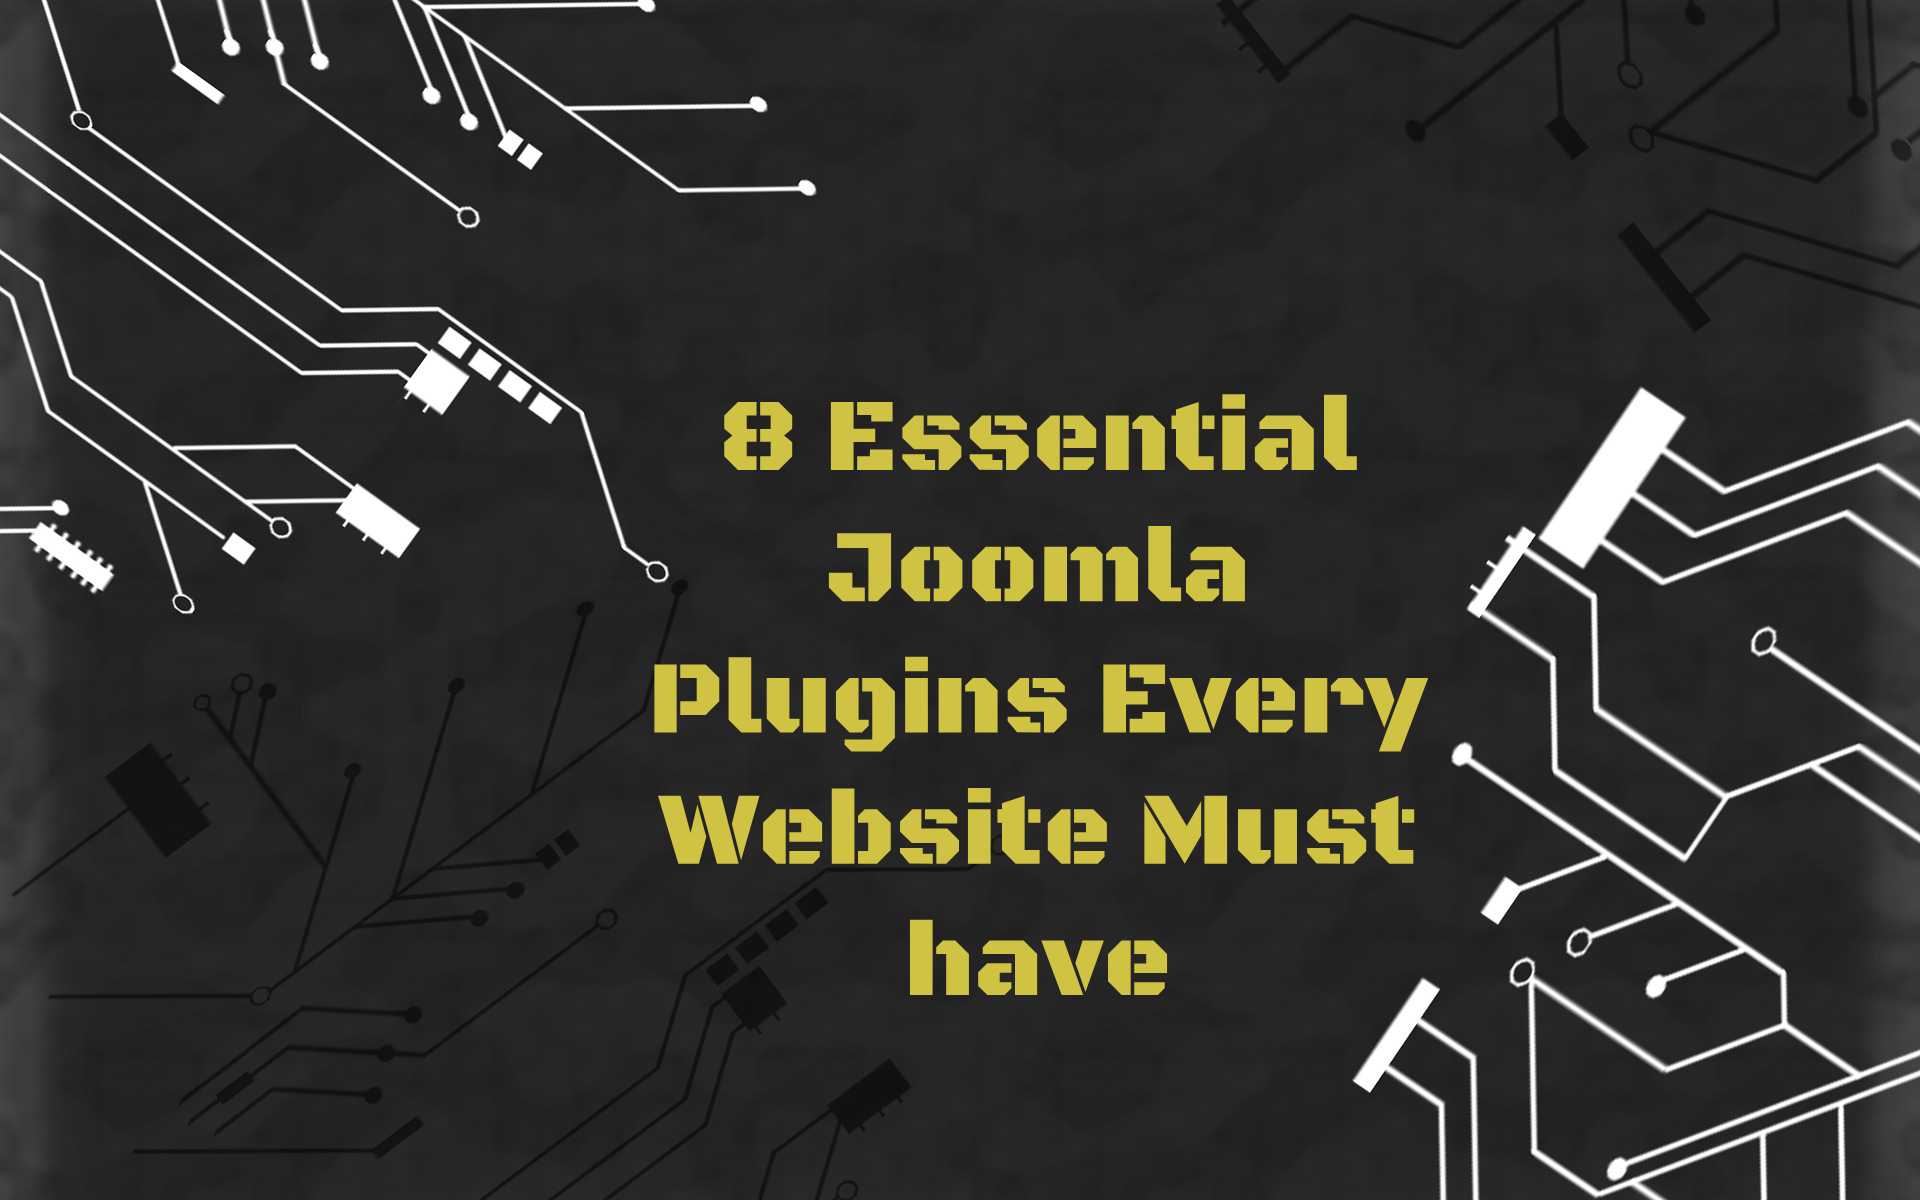 Joomla Plugins Every Website Must have